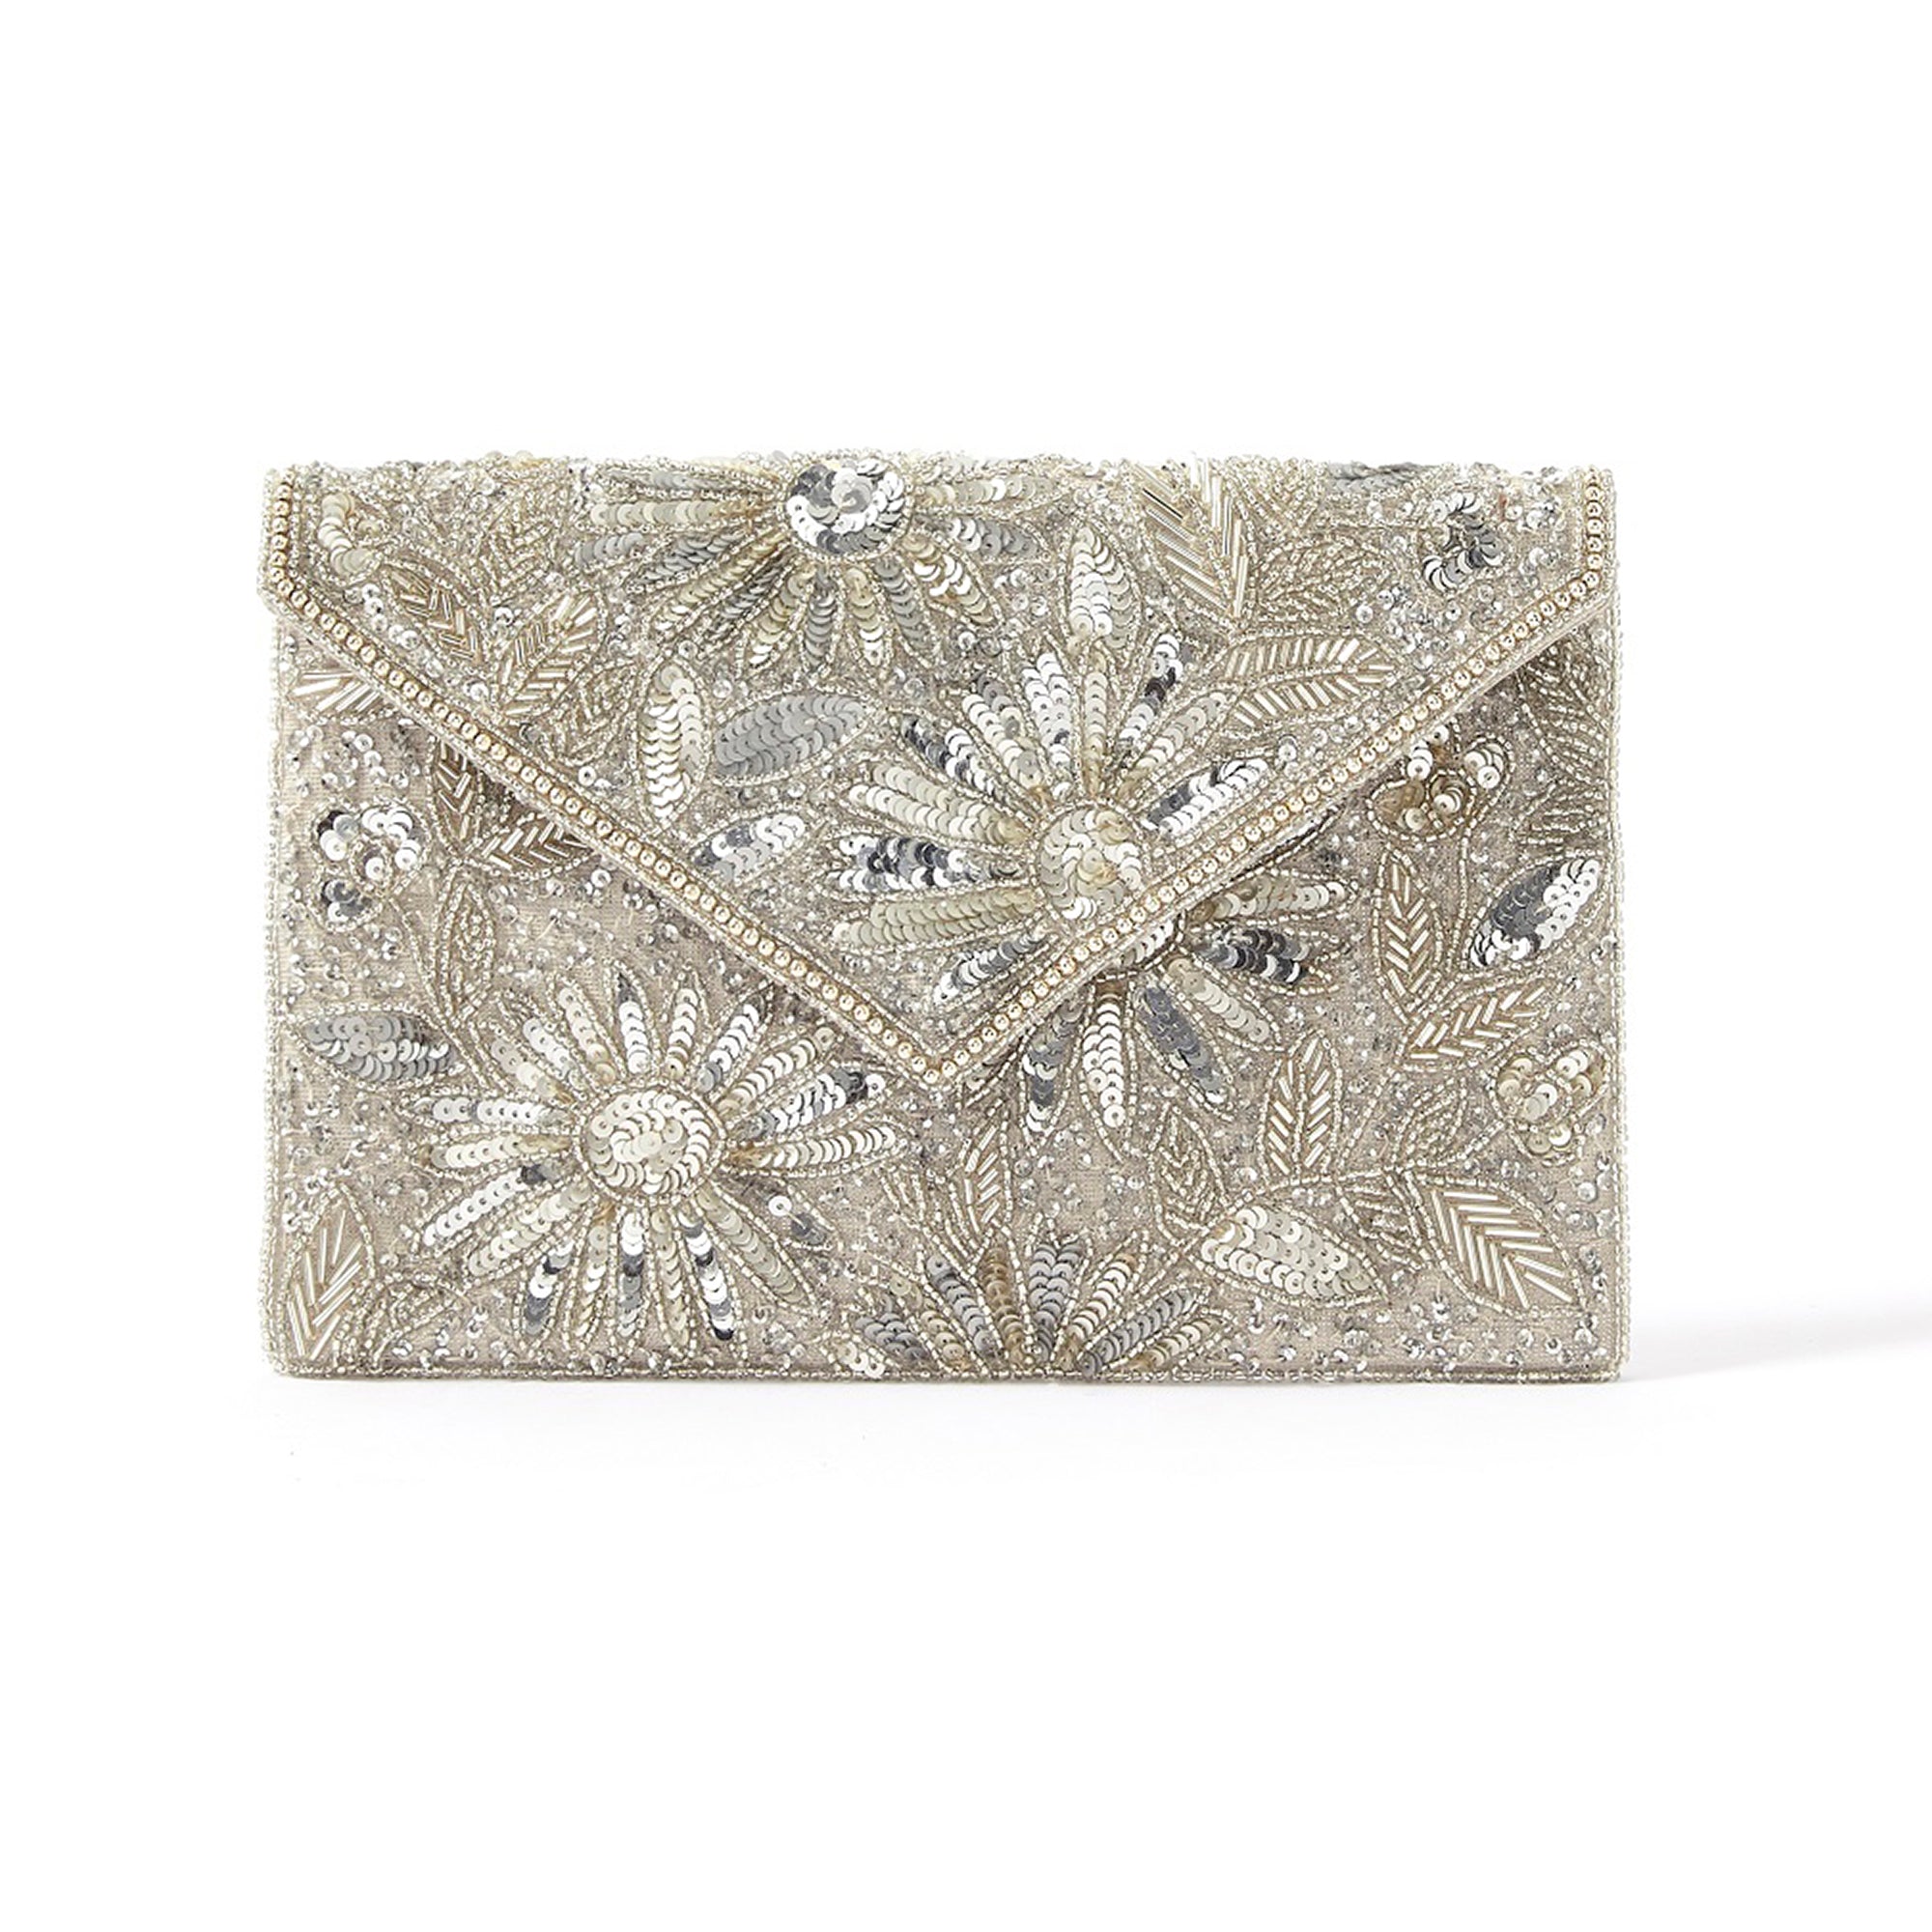 Sparkly Silver Clasp Clutch Shoulder Bag Perfect Eye-catching Silver Handbag  Diamante Clutch Grab Bag Clutch Bag Gift Present Wedding Party - Etsy